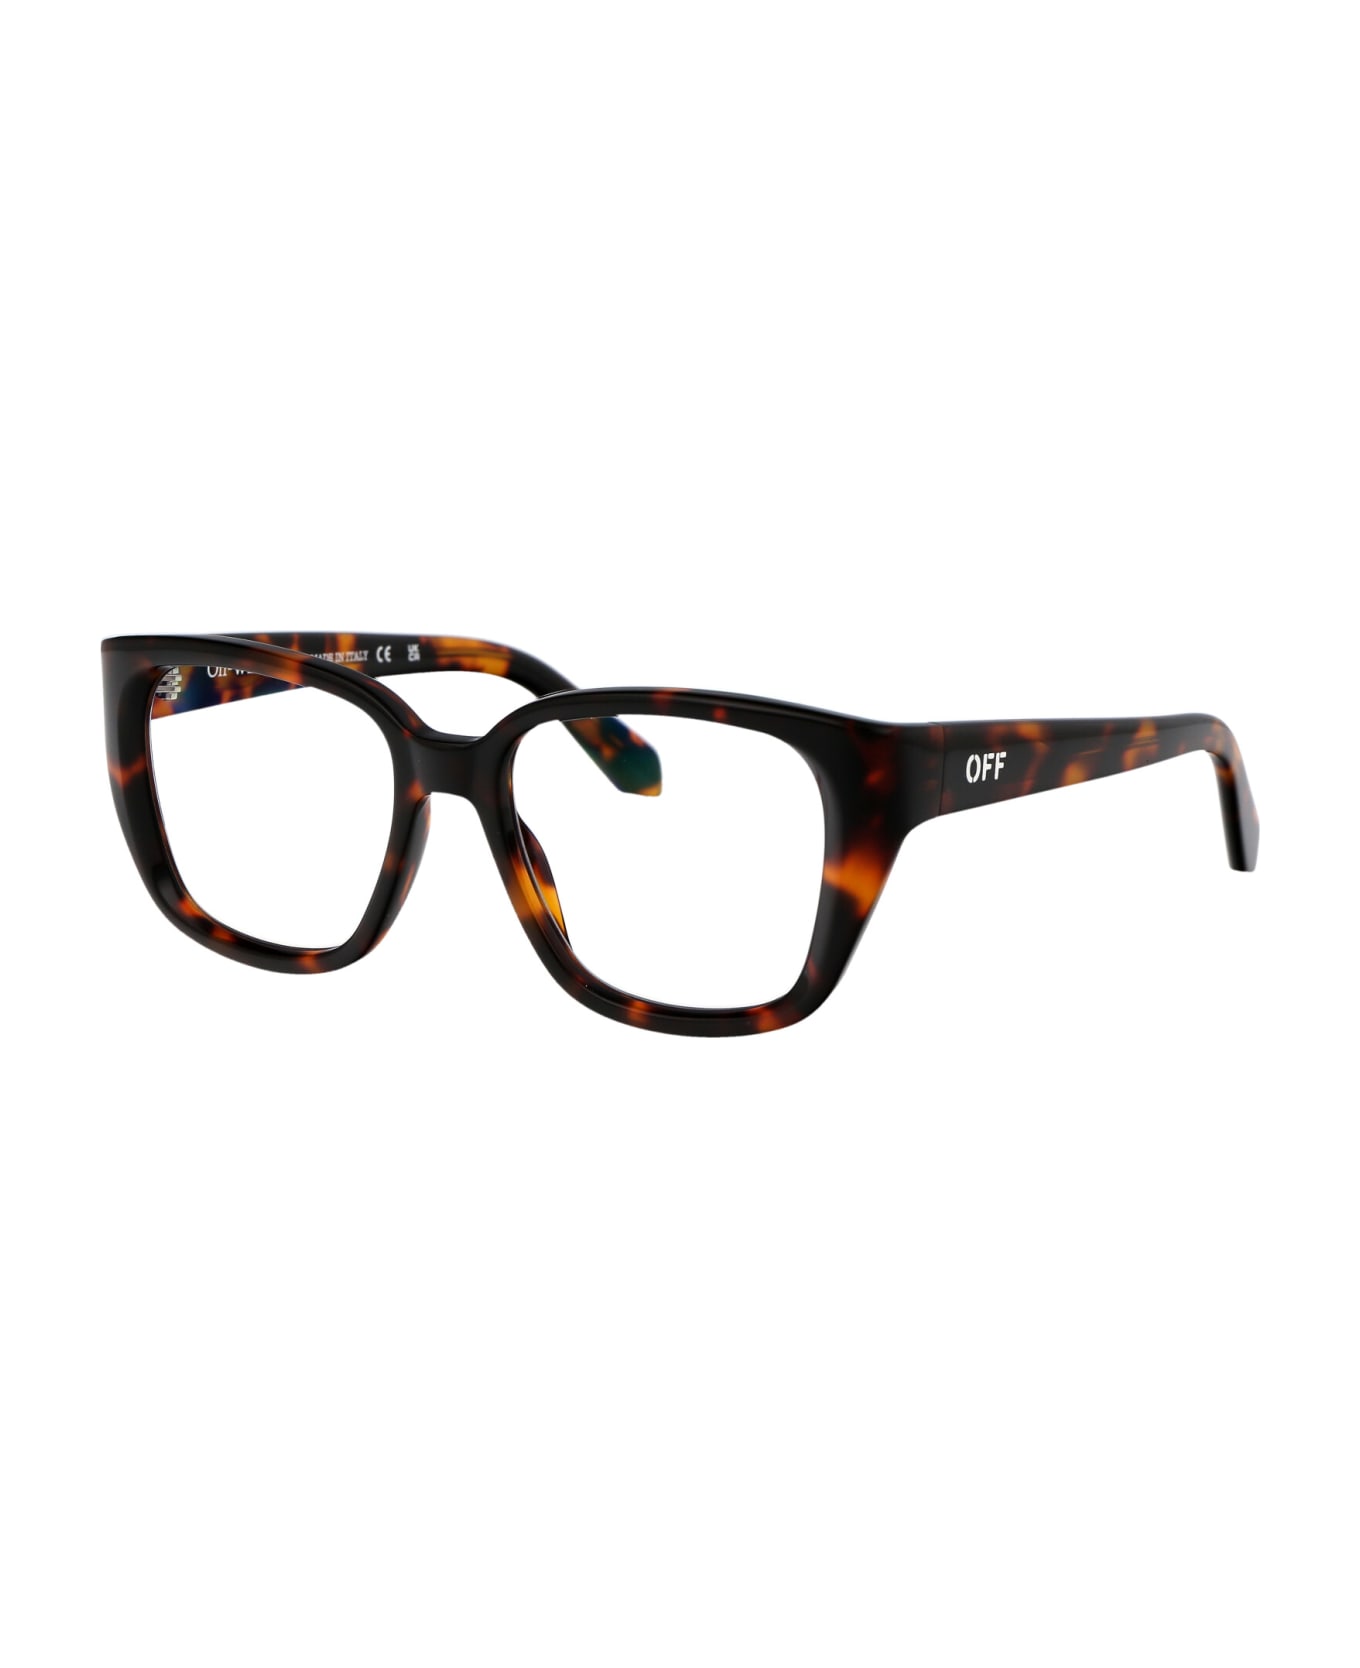 Off-White Optical Style 63 Glasses - 6000 HAVANA アイウェア